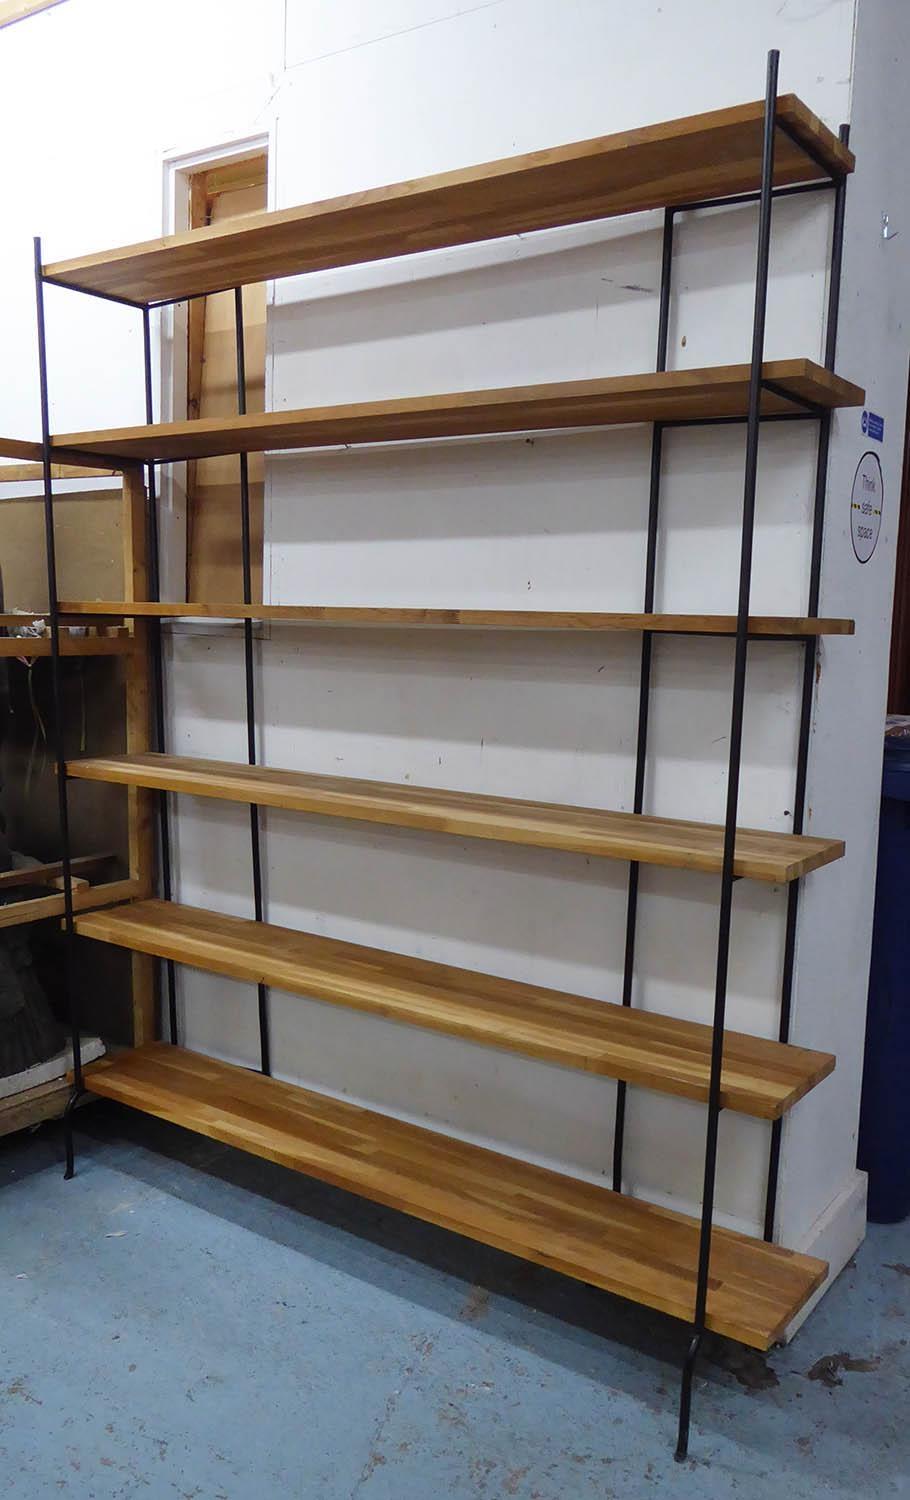 BOOKCASE, contemporary wire design, plank shelves, 170cm x 32cm x 209cm. (with slight faults)